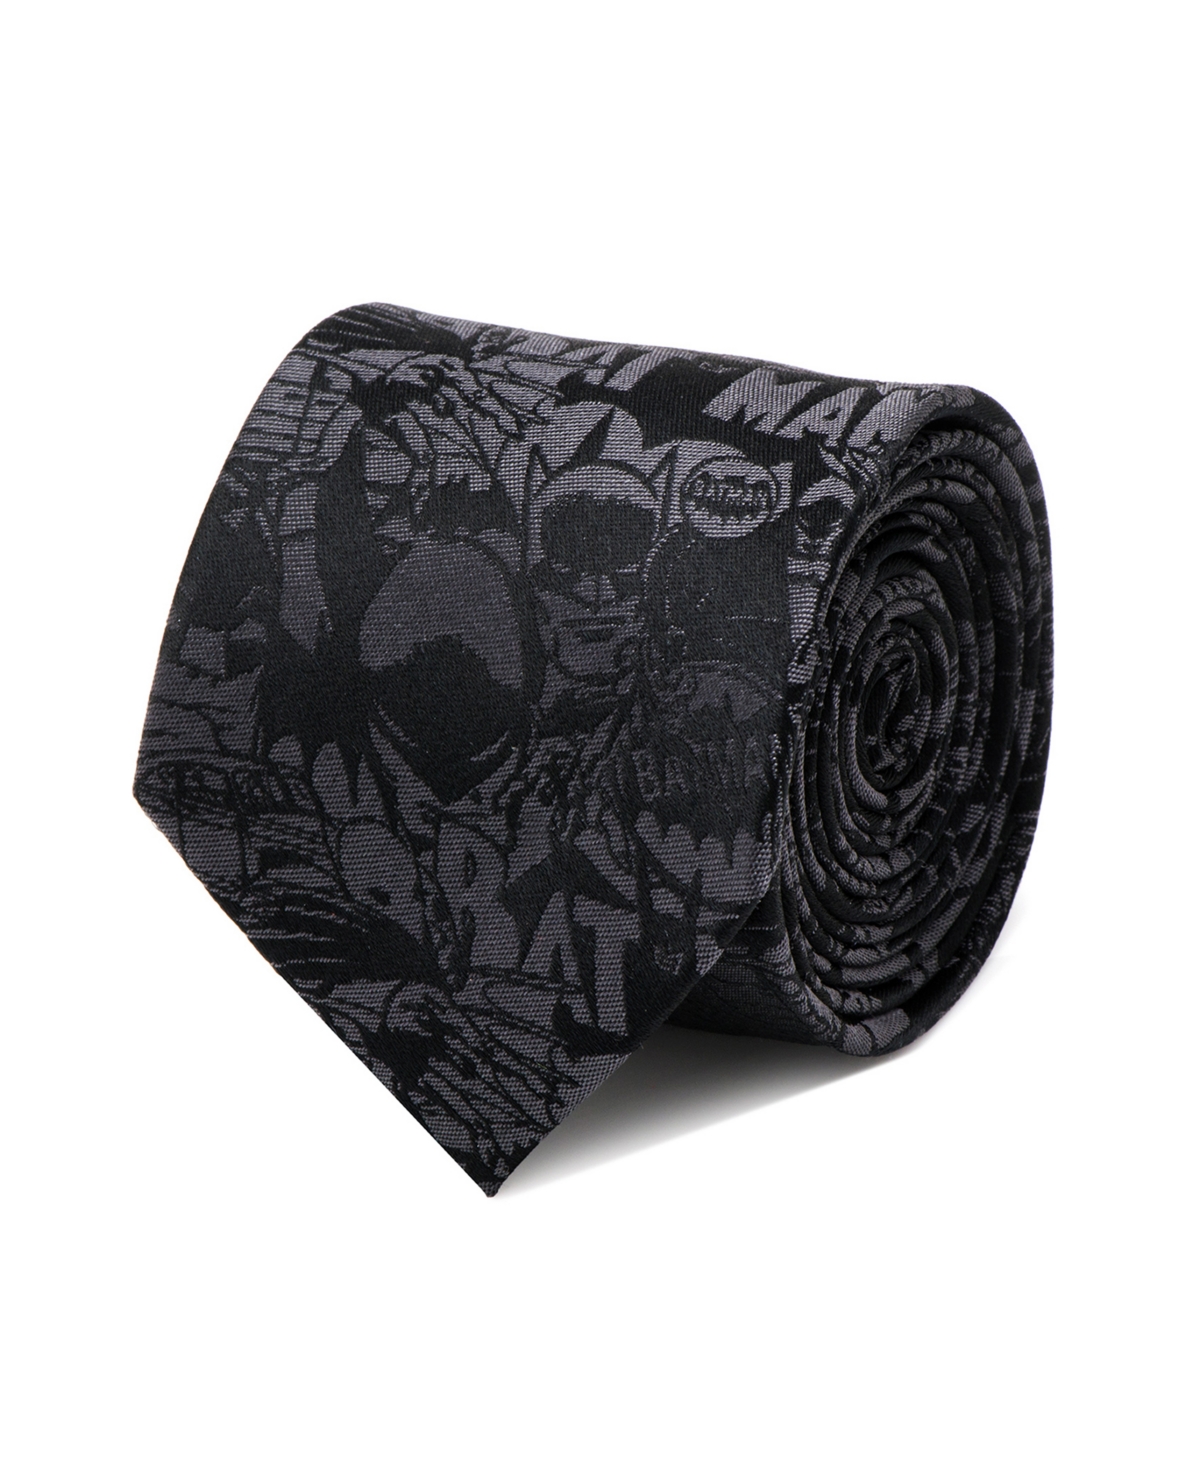 Batman Comic Men's Tie - Black